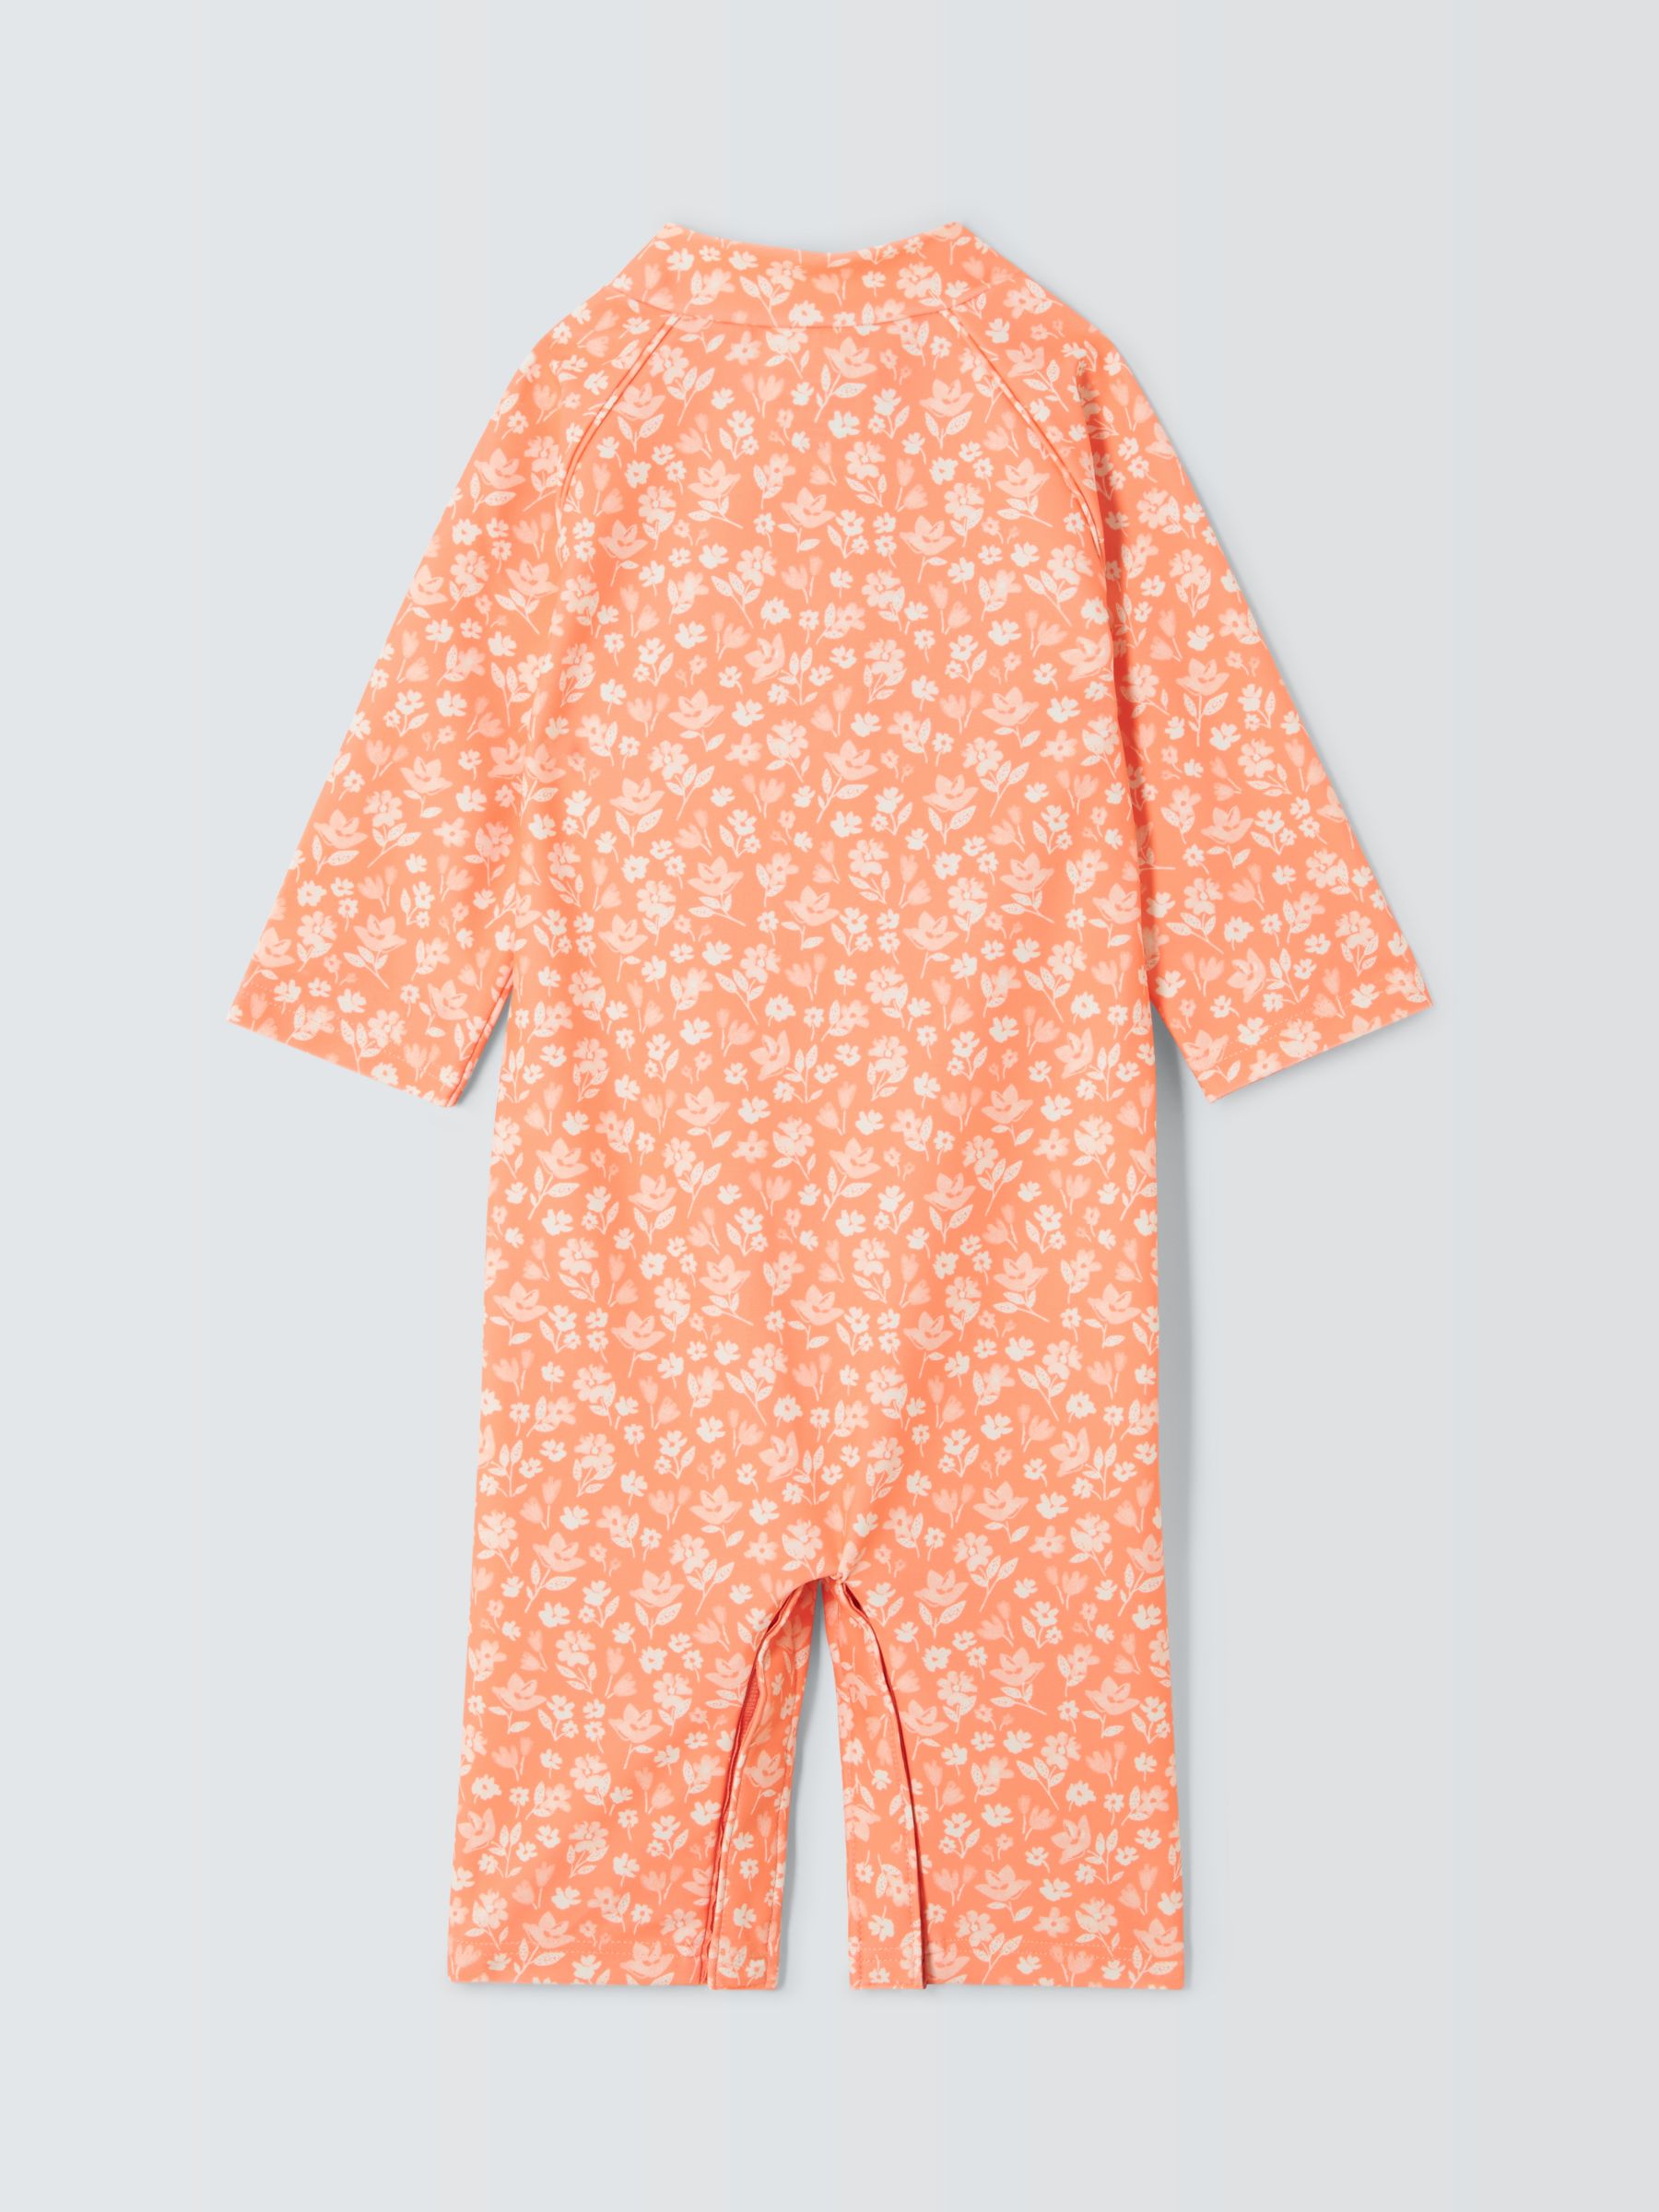 John Lewis Baby Floral Sunpro Swimsuit, Coral, 3-6 months